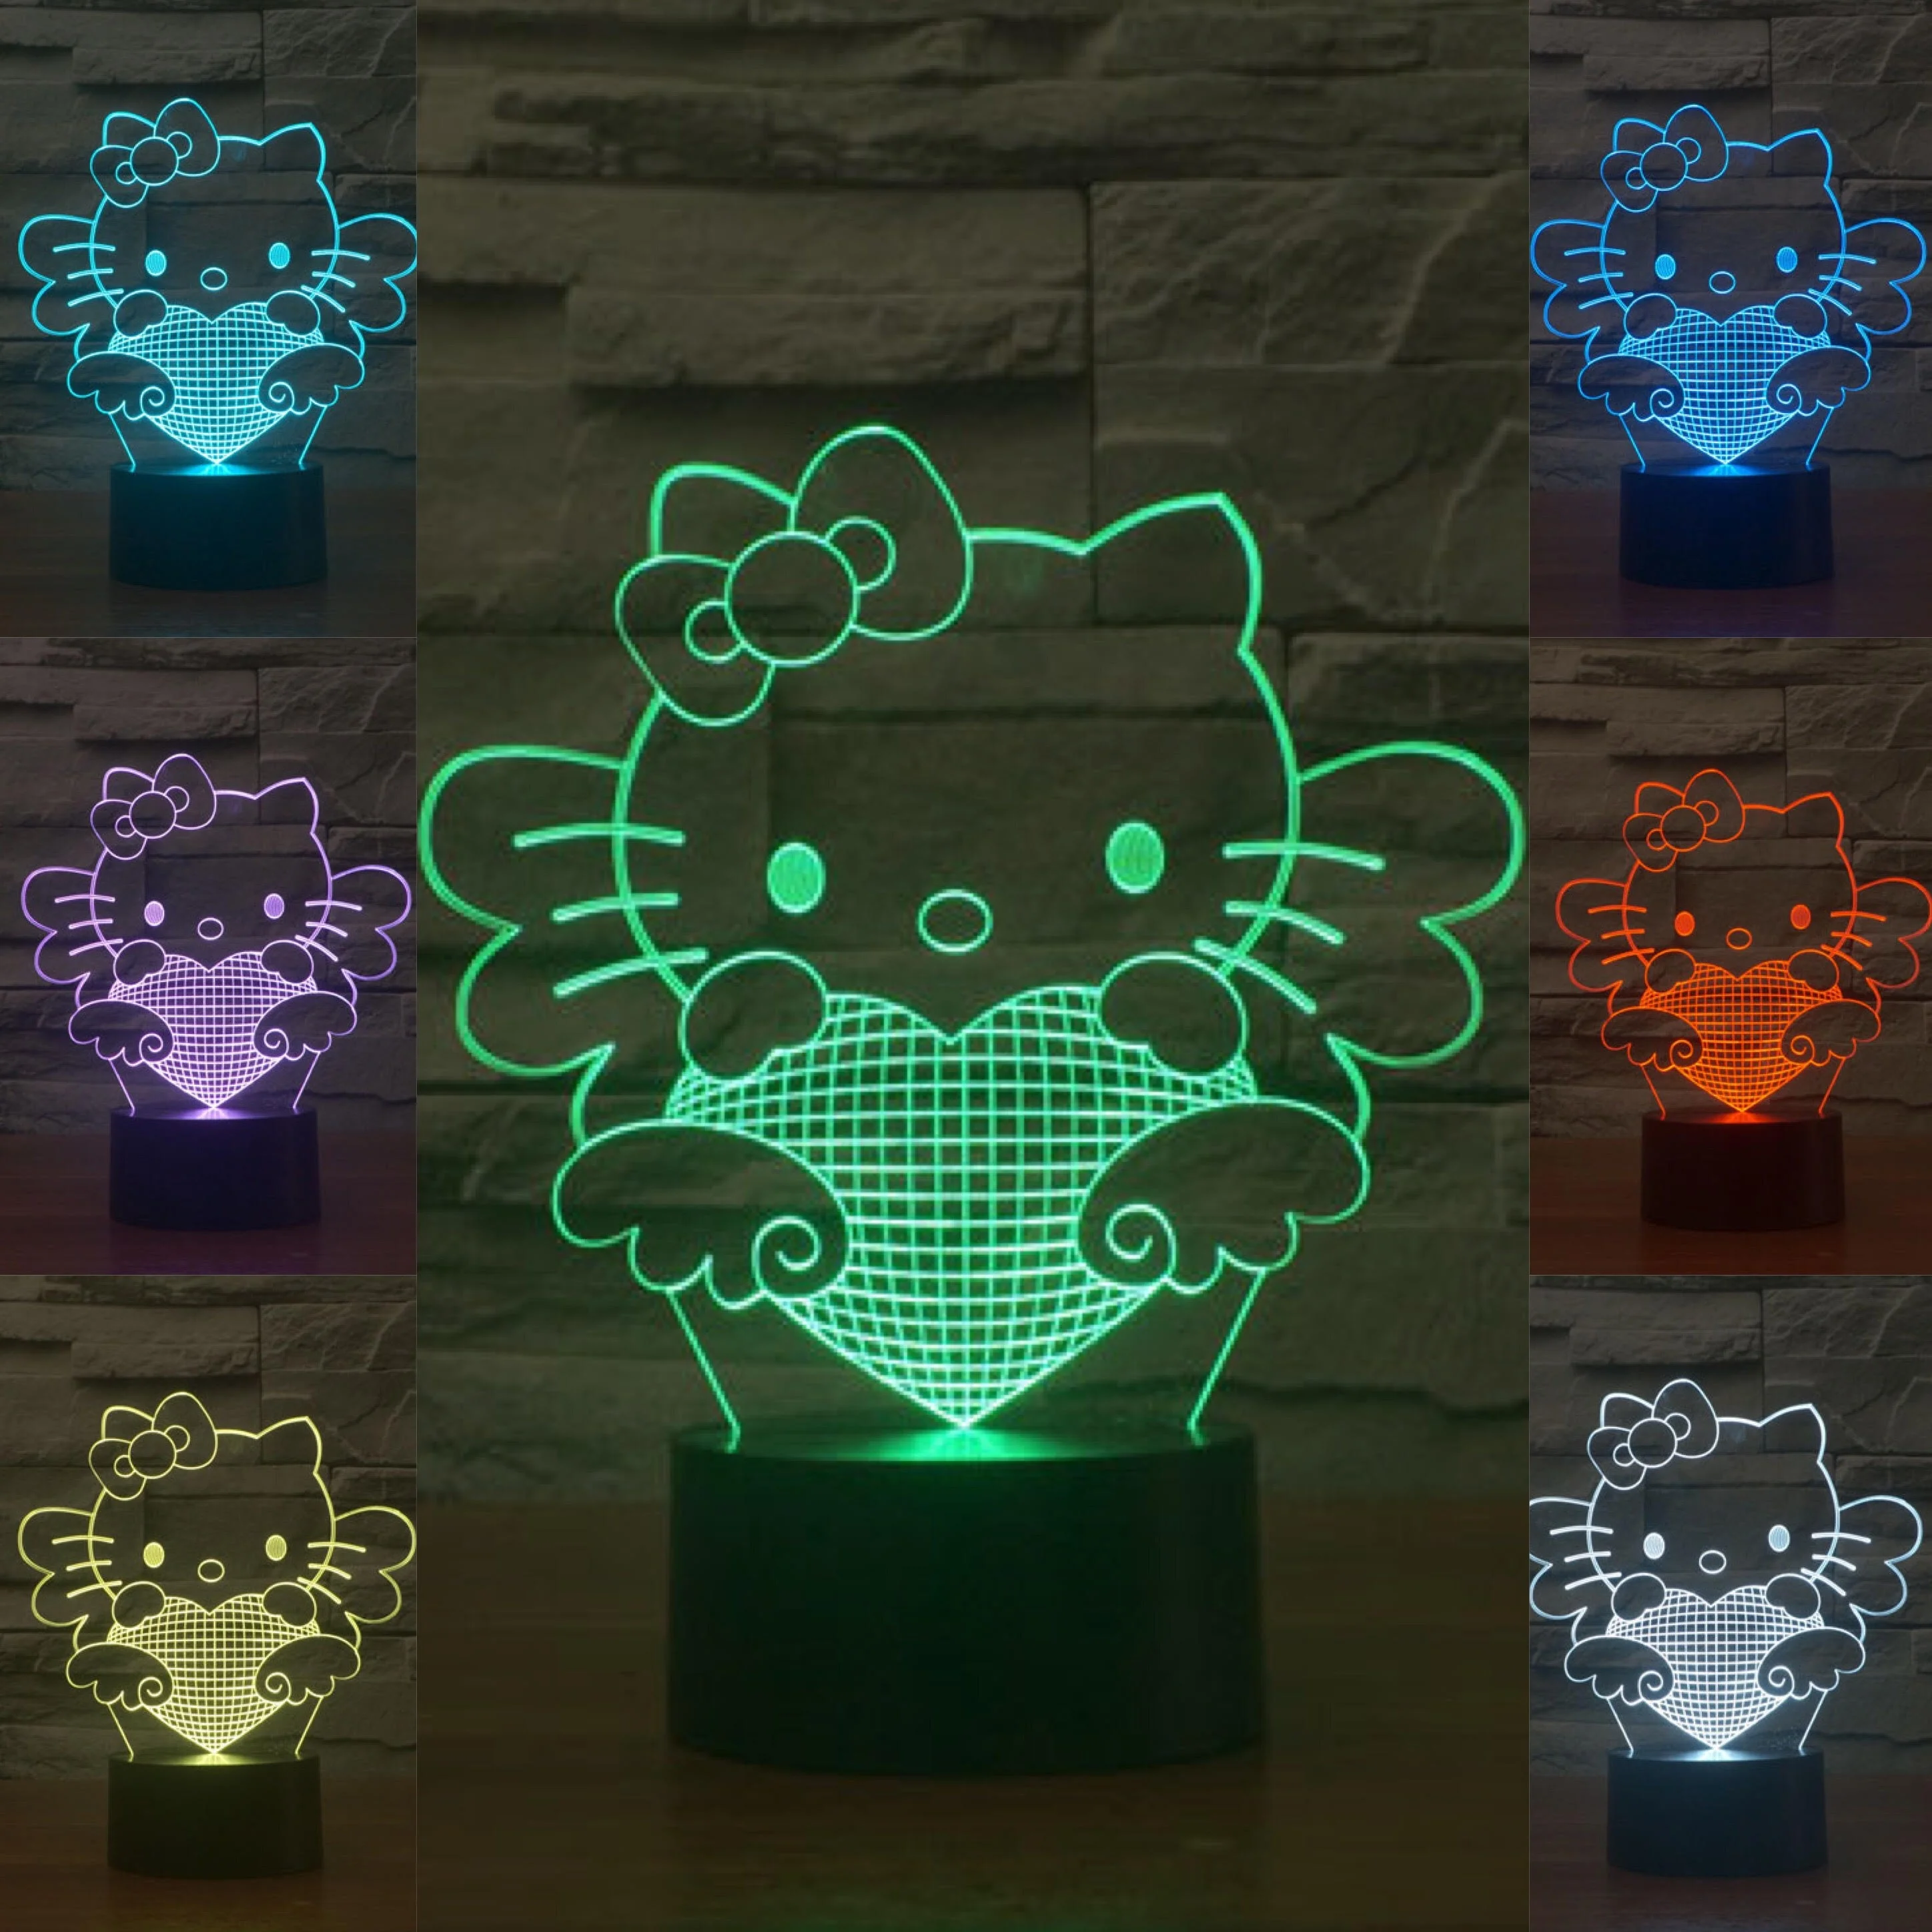 Details about   3D Acrylic Robot Optics 7 Color Night Light Change LED Light Kids Room Light 